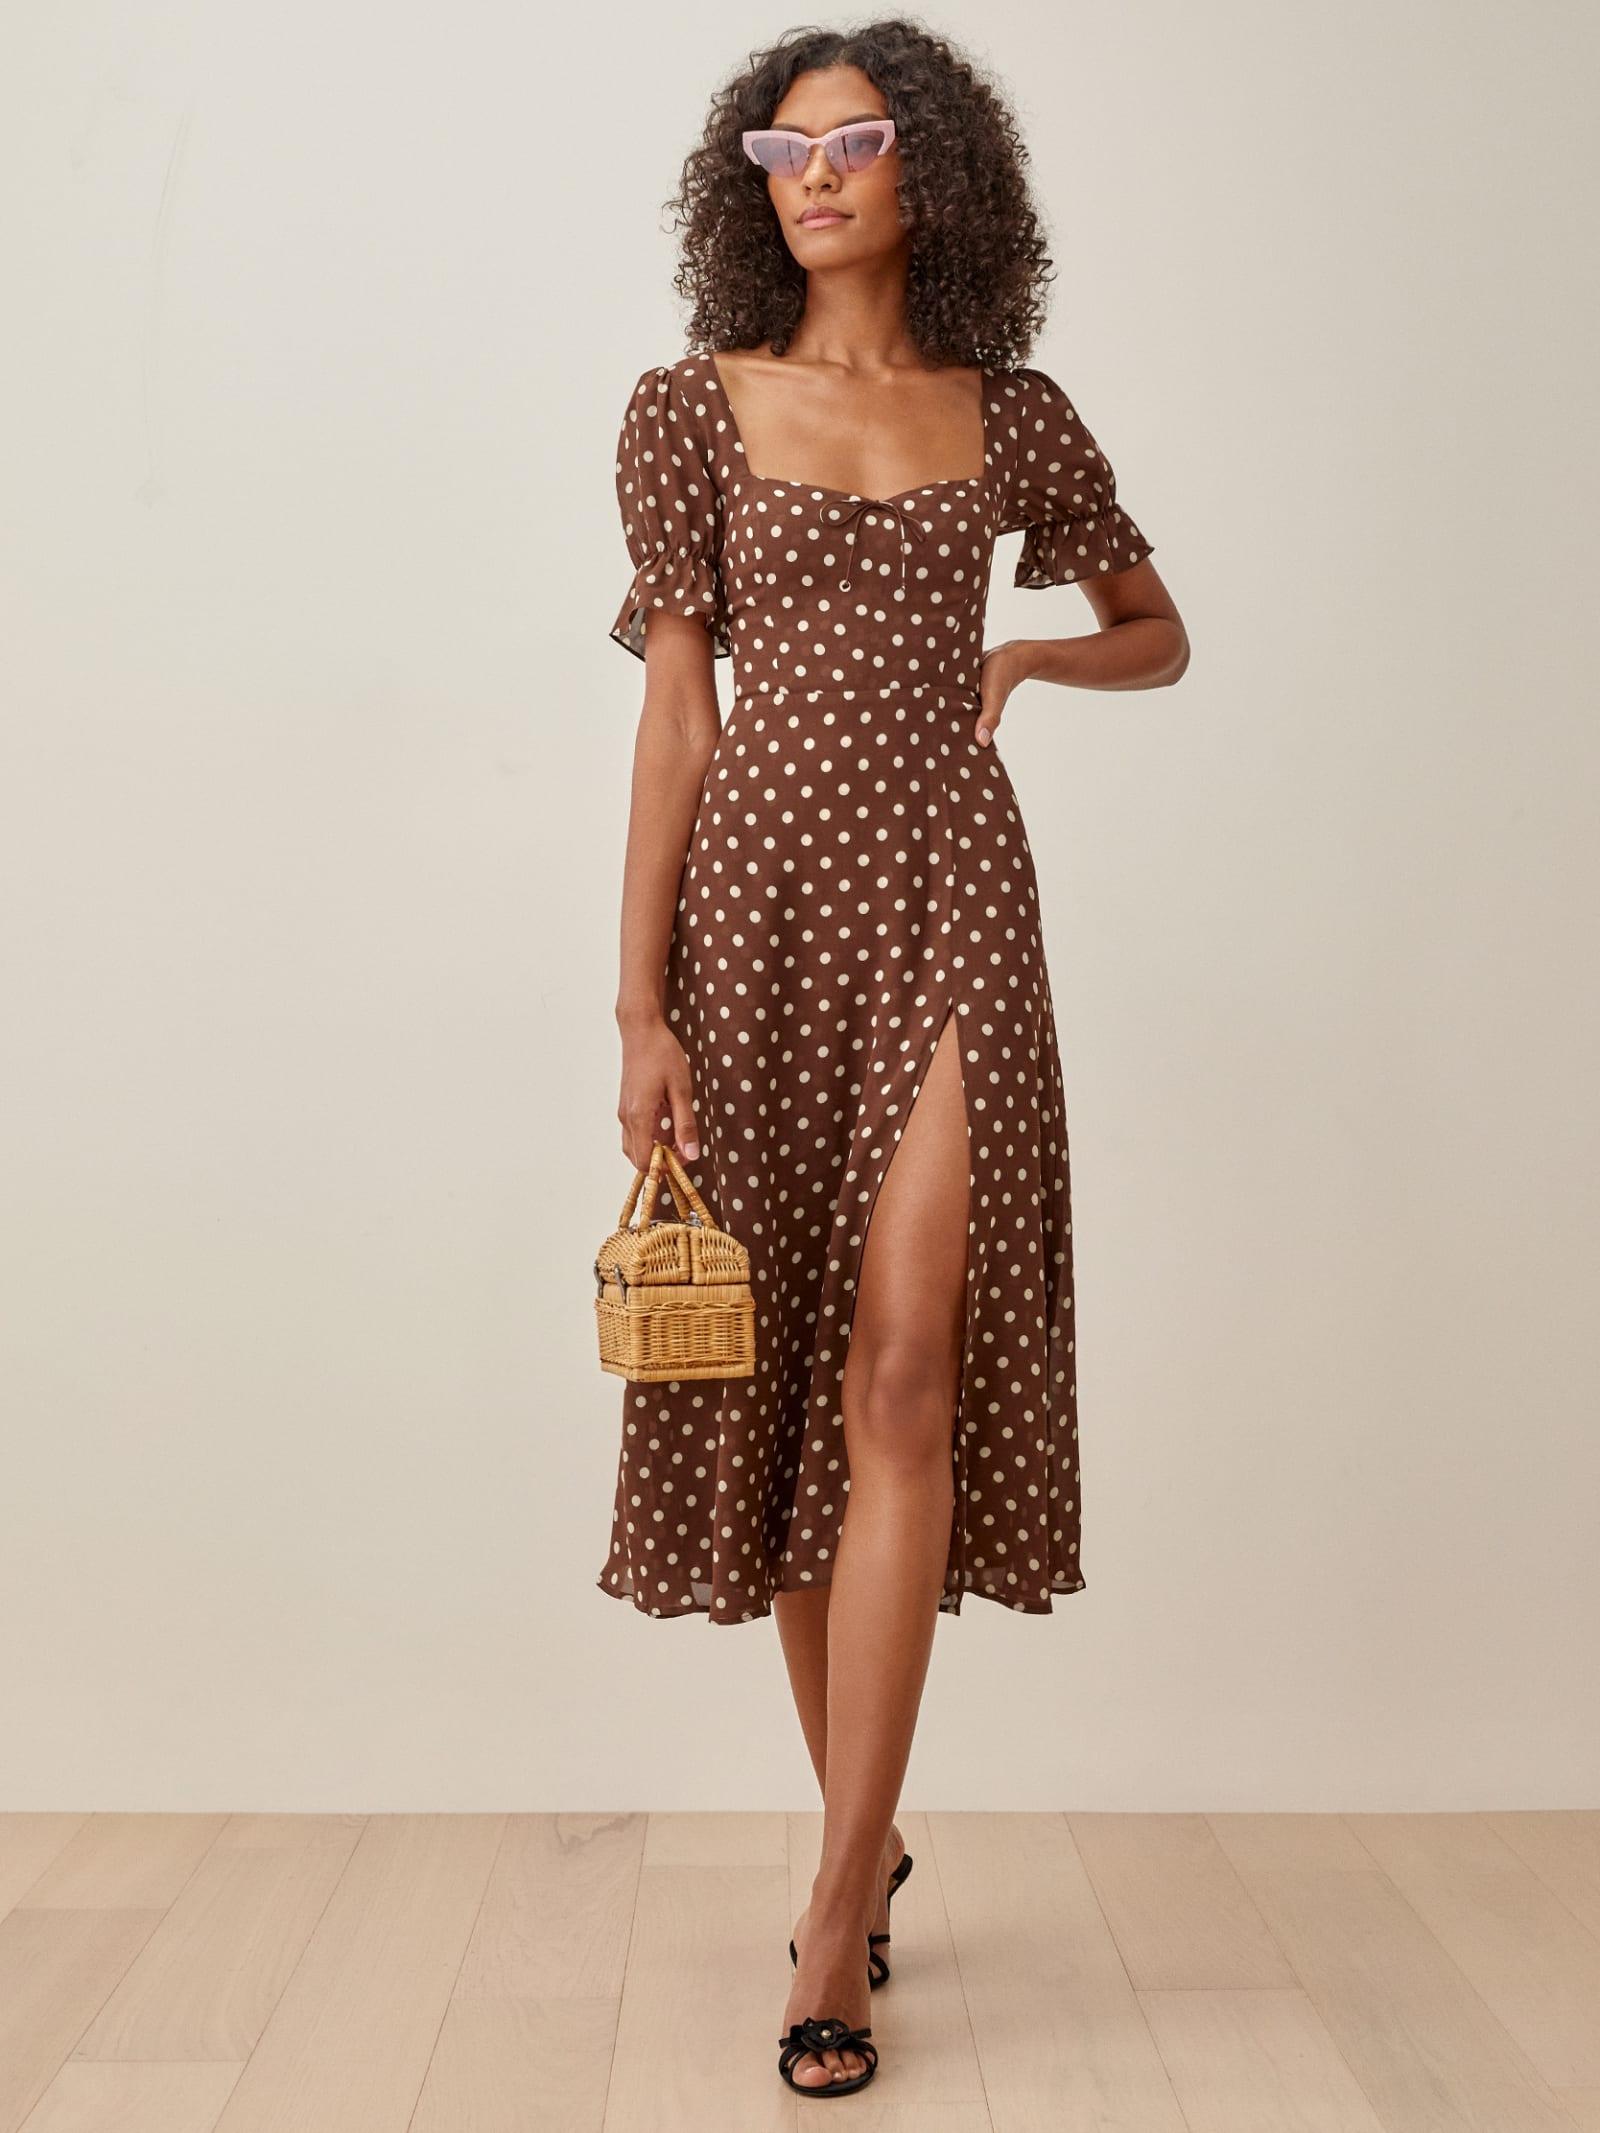 reformation brown polka dot dress